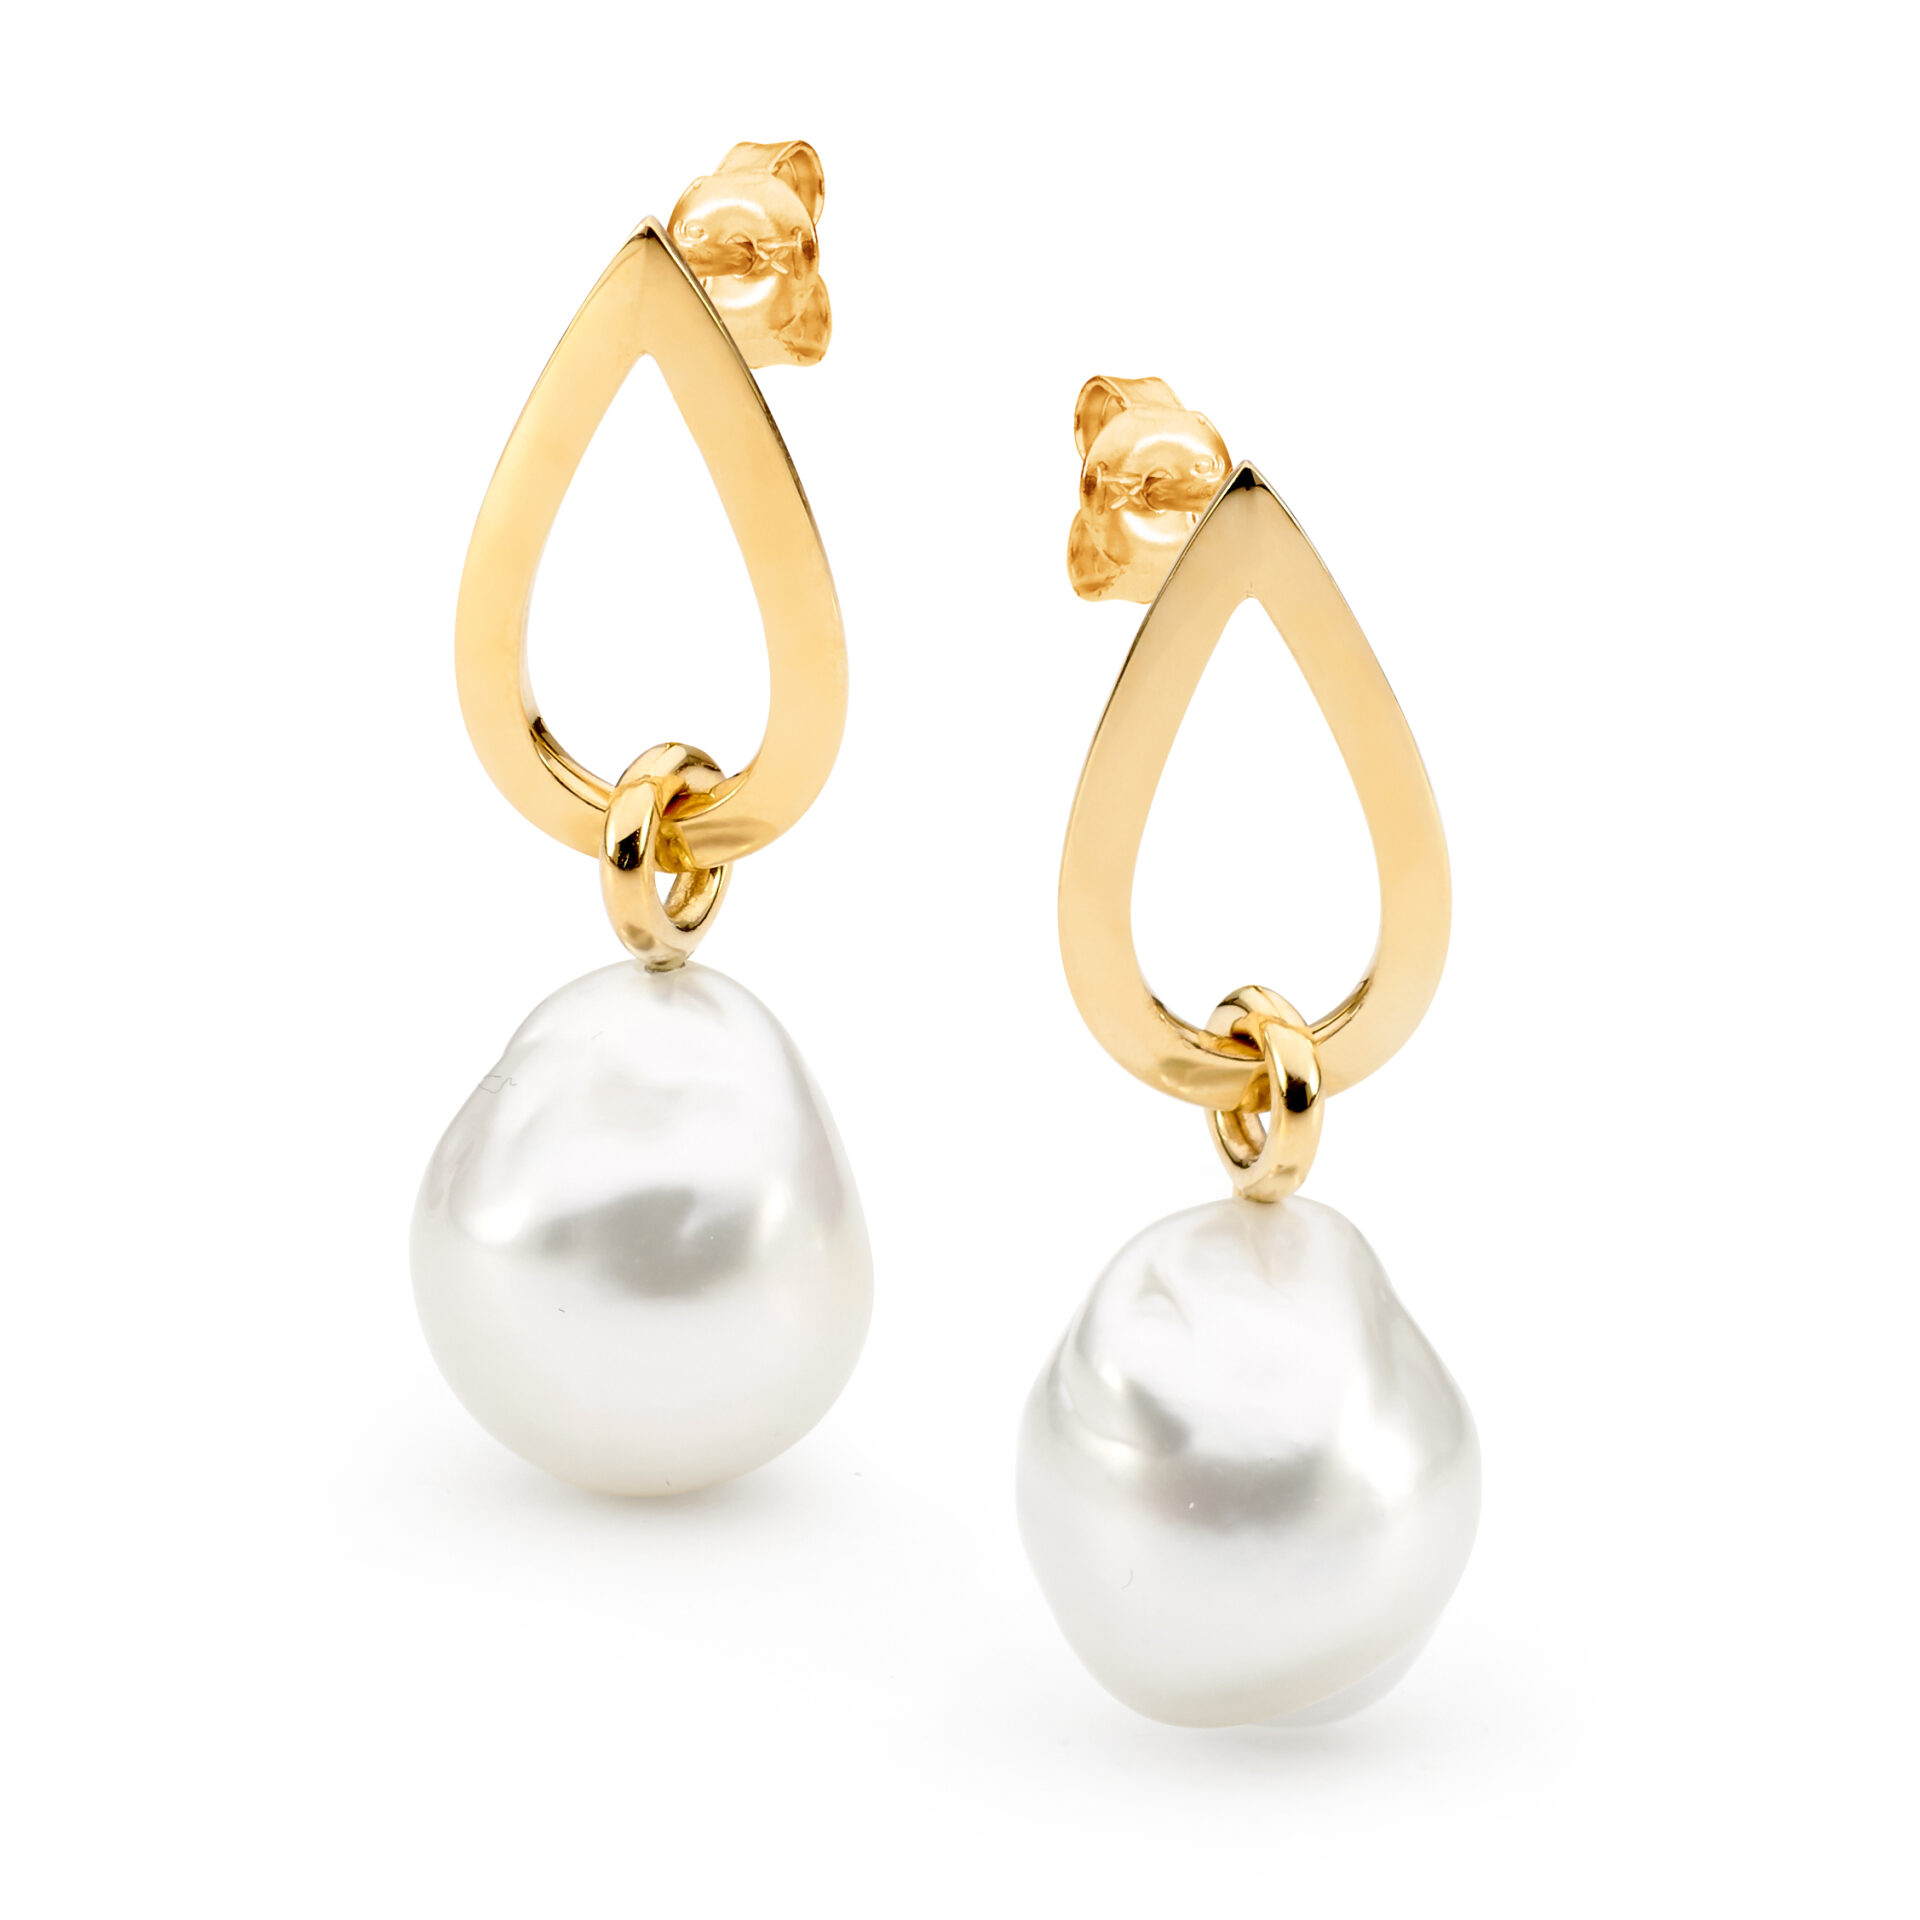 Sky Pearl Drop Earrings - Allure South Sea Pearls